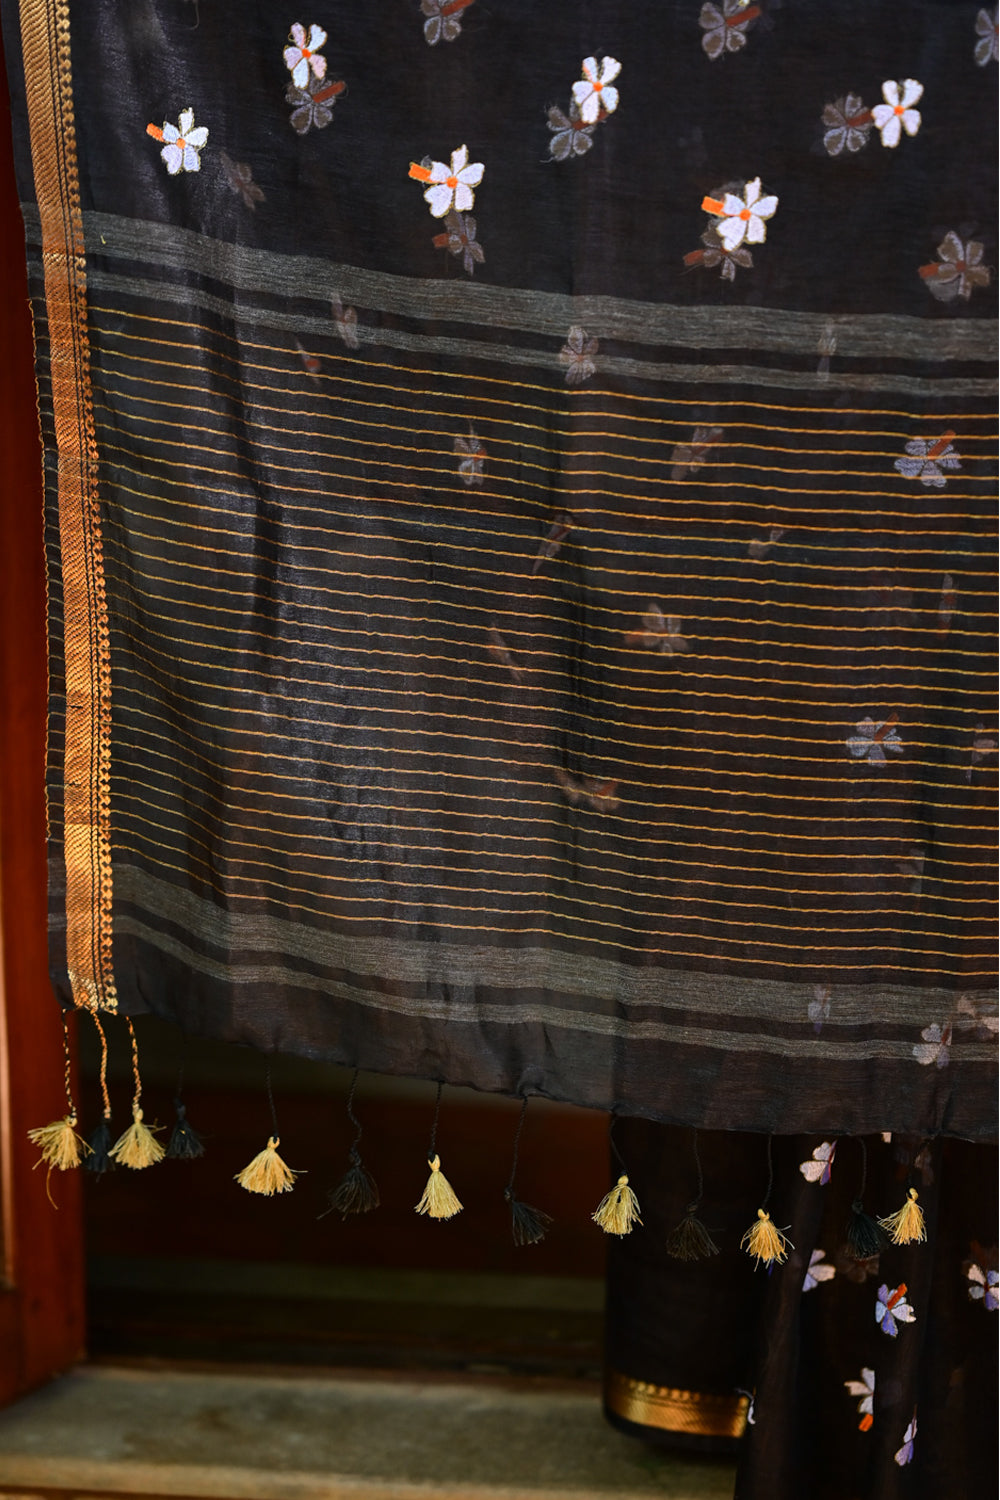 Black Silk Linen Saree with embroidered parijat flowers